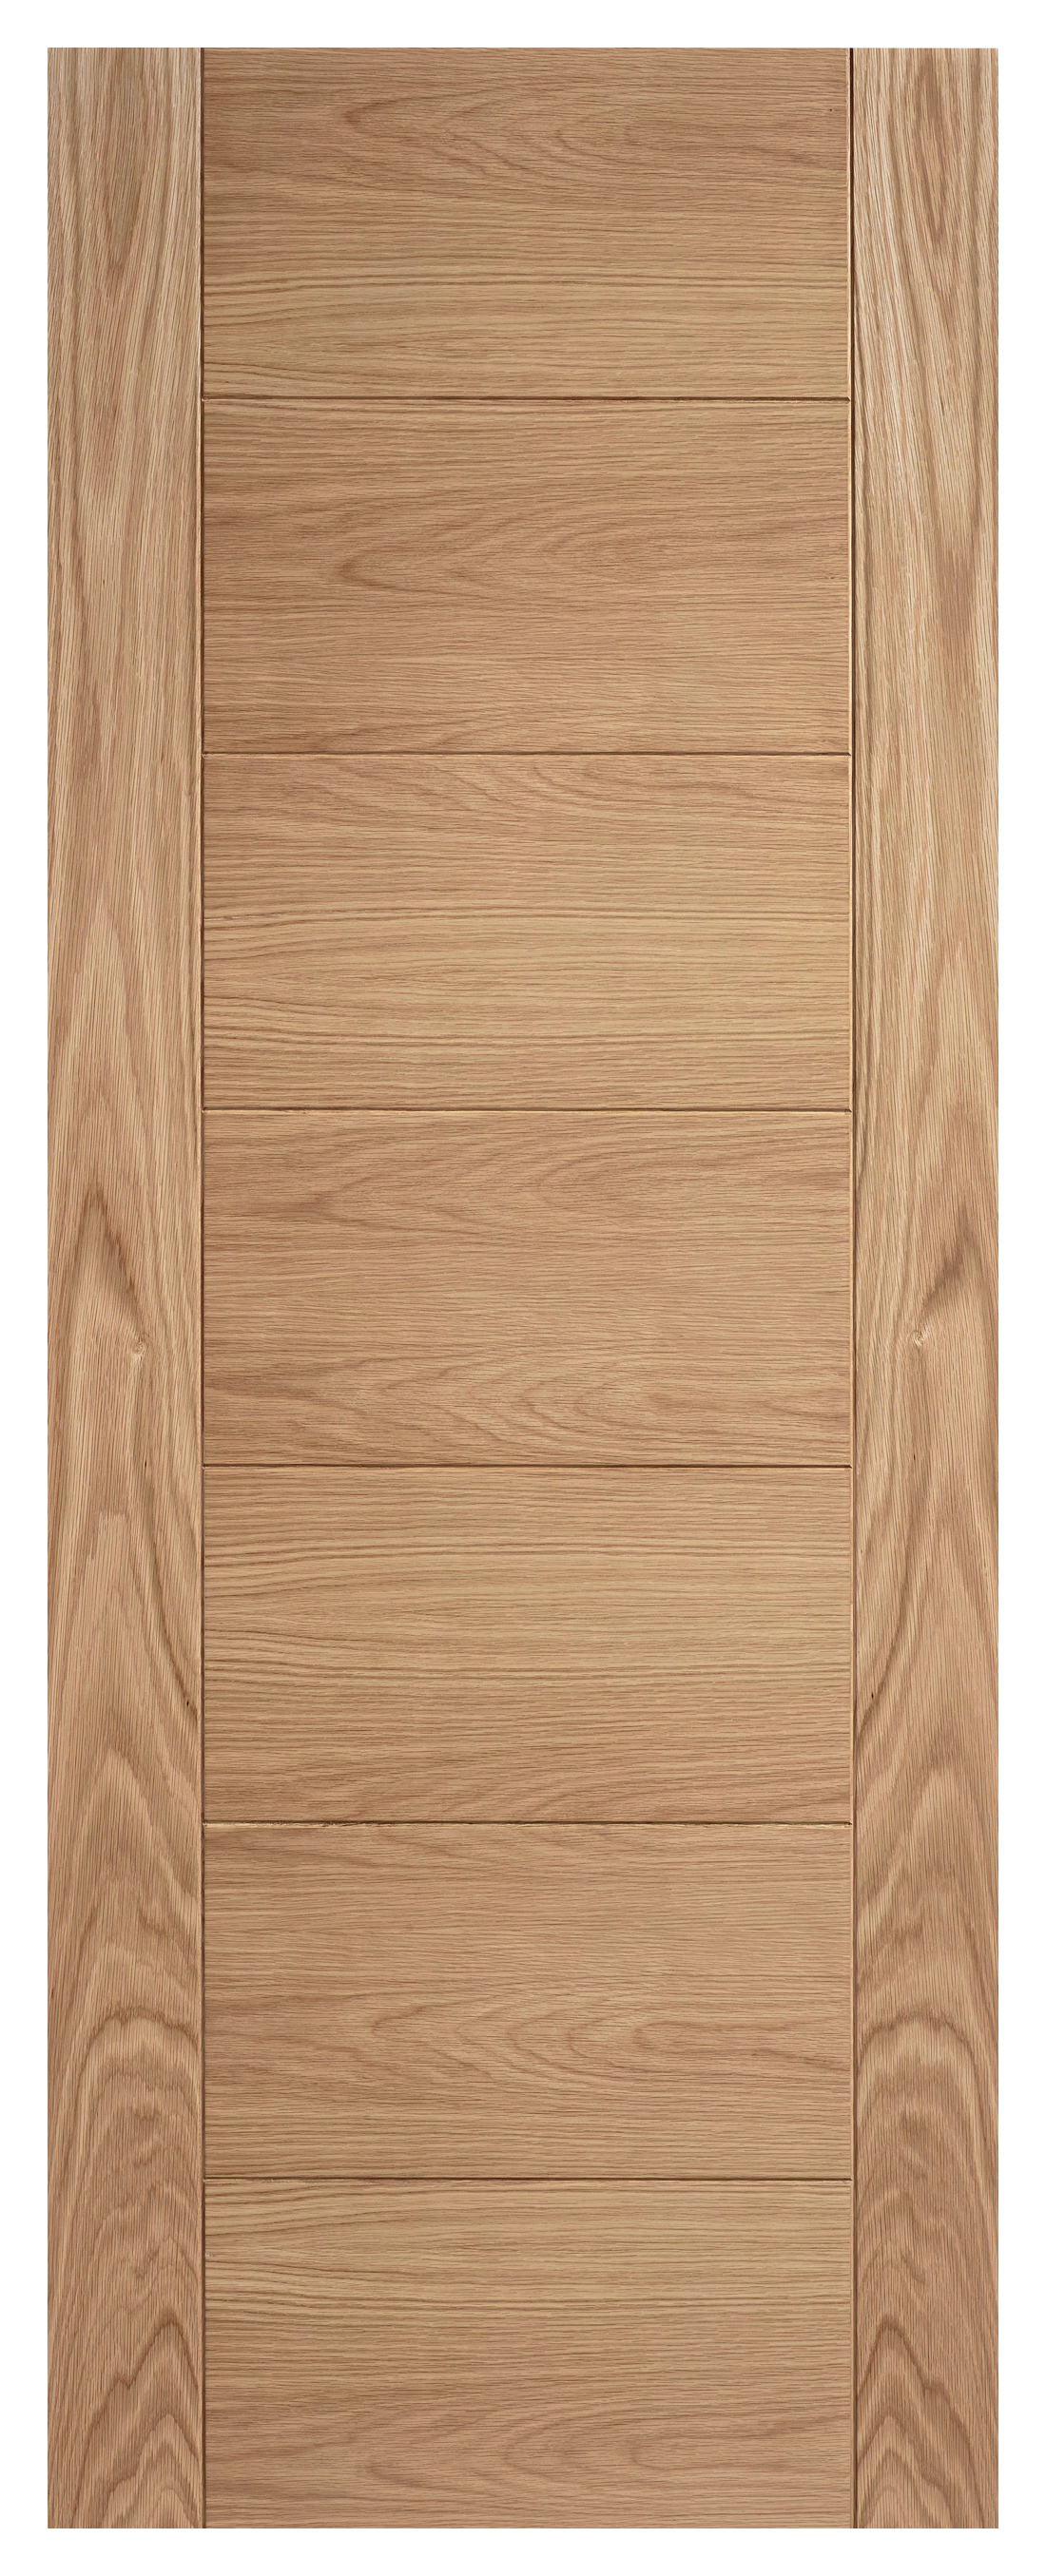 Image of LPD Internal Carini 7 Panel Unfinished Oak FD30 Fire Door - 762 x 1981mm